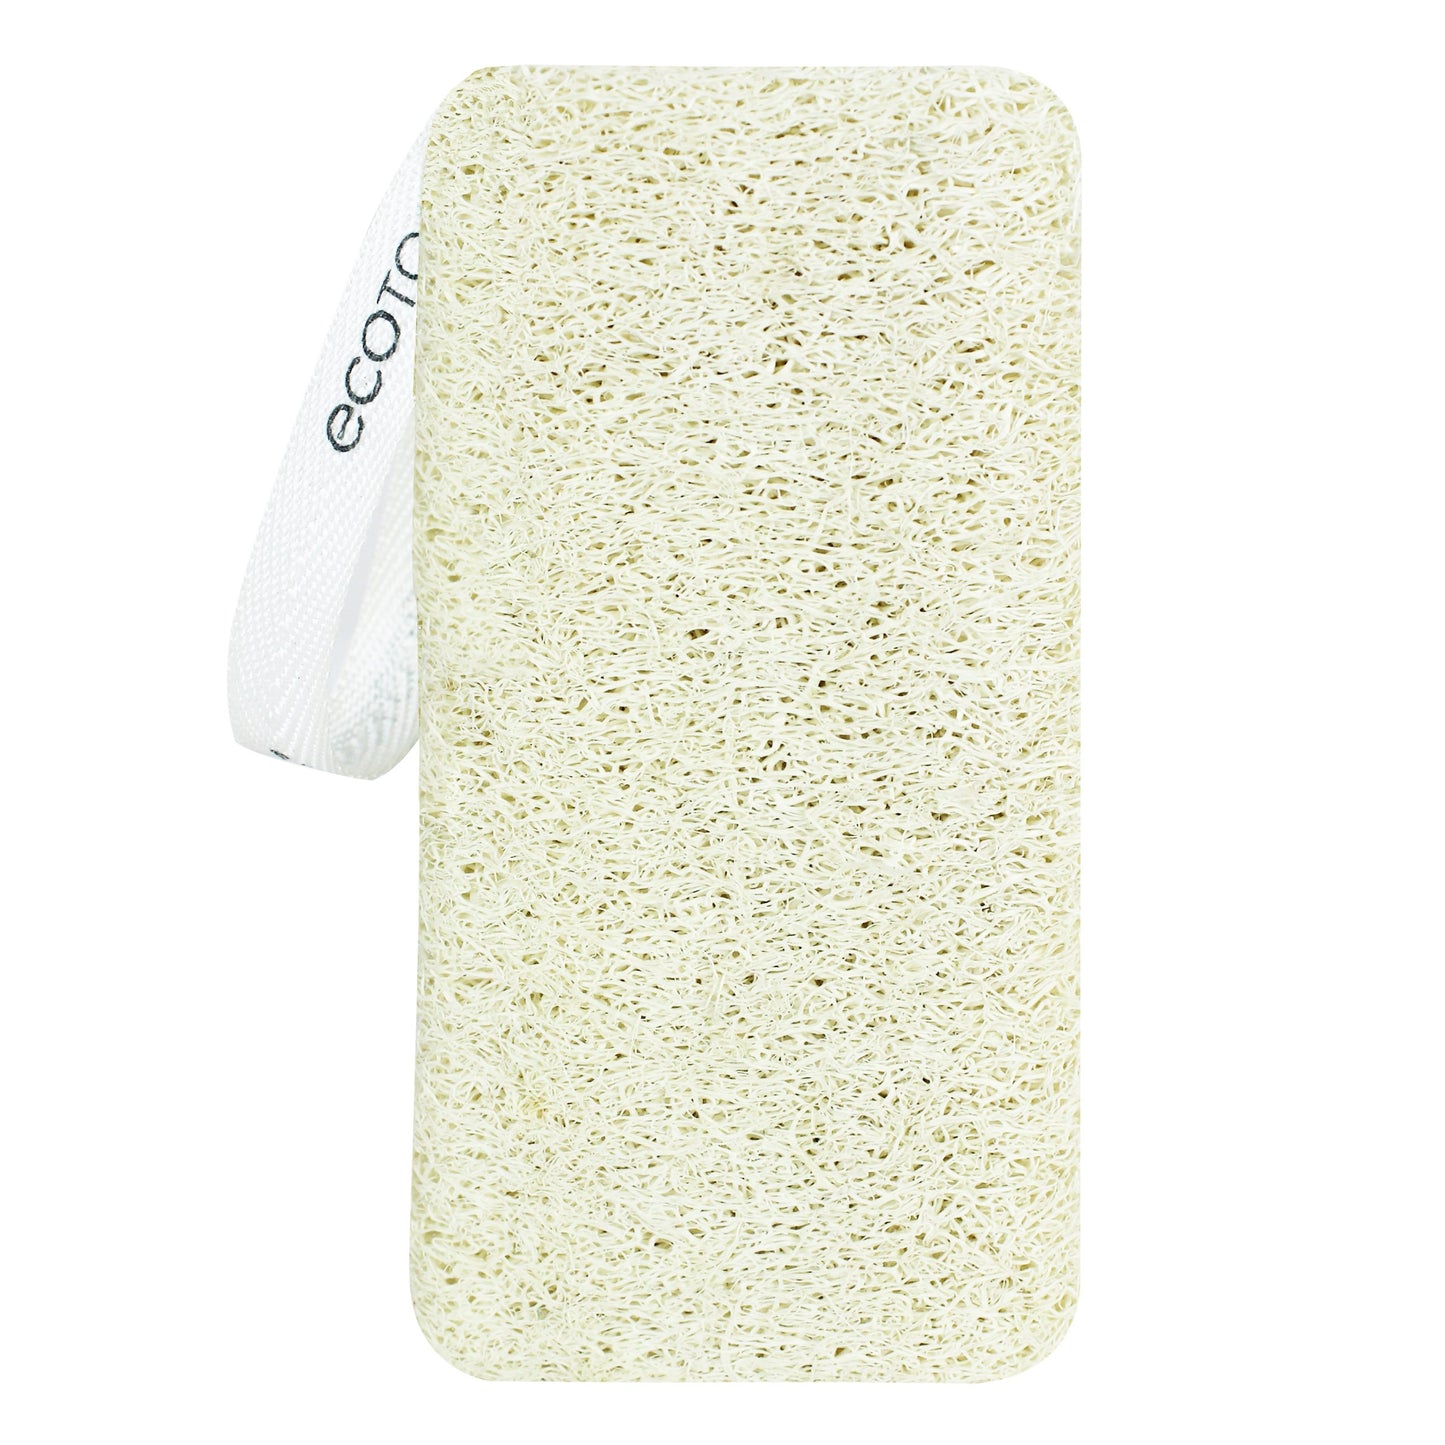 Eco Tools Loofah Body Sponge, Natural and Exfoliating